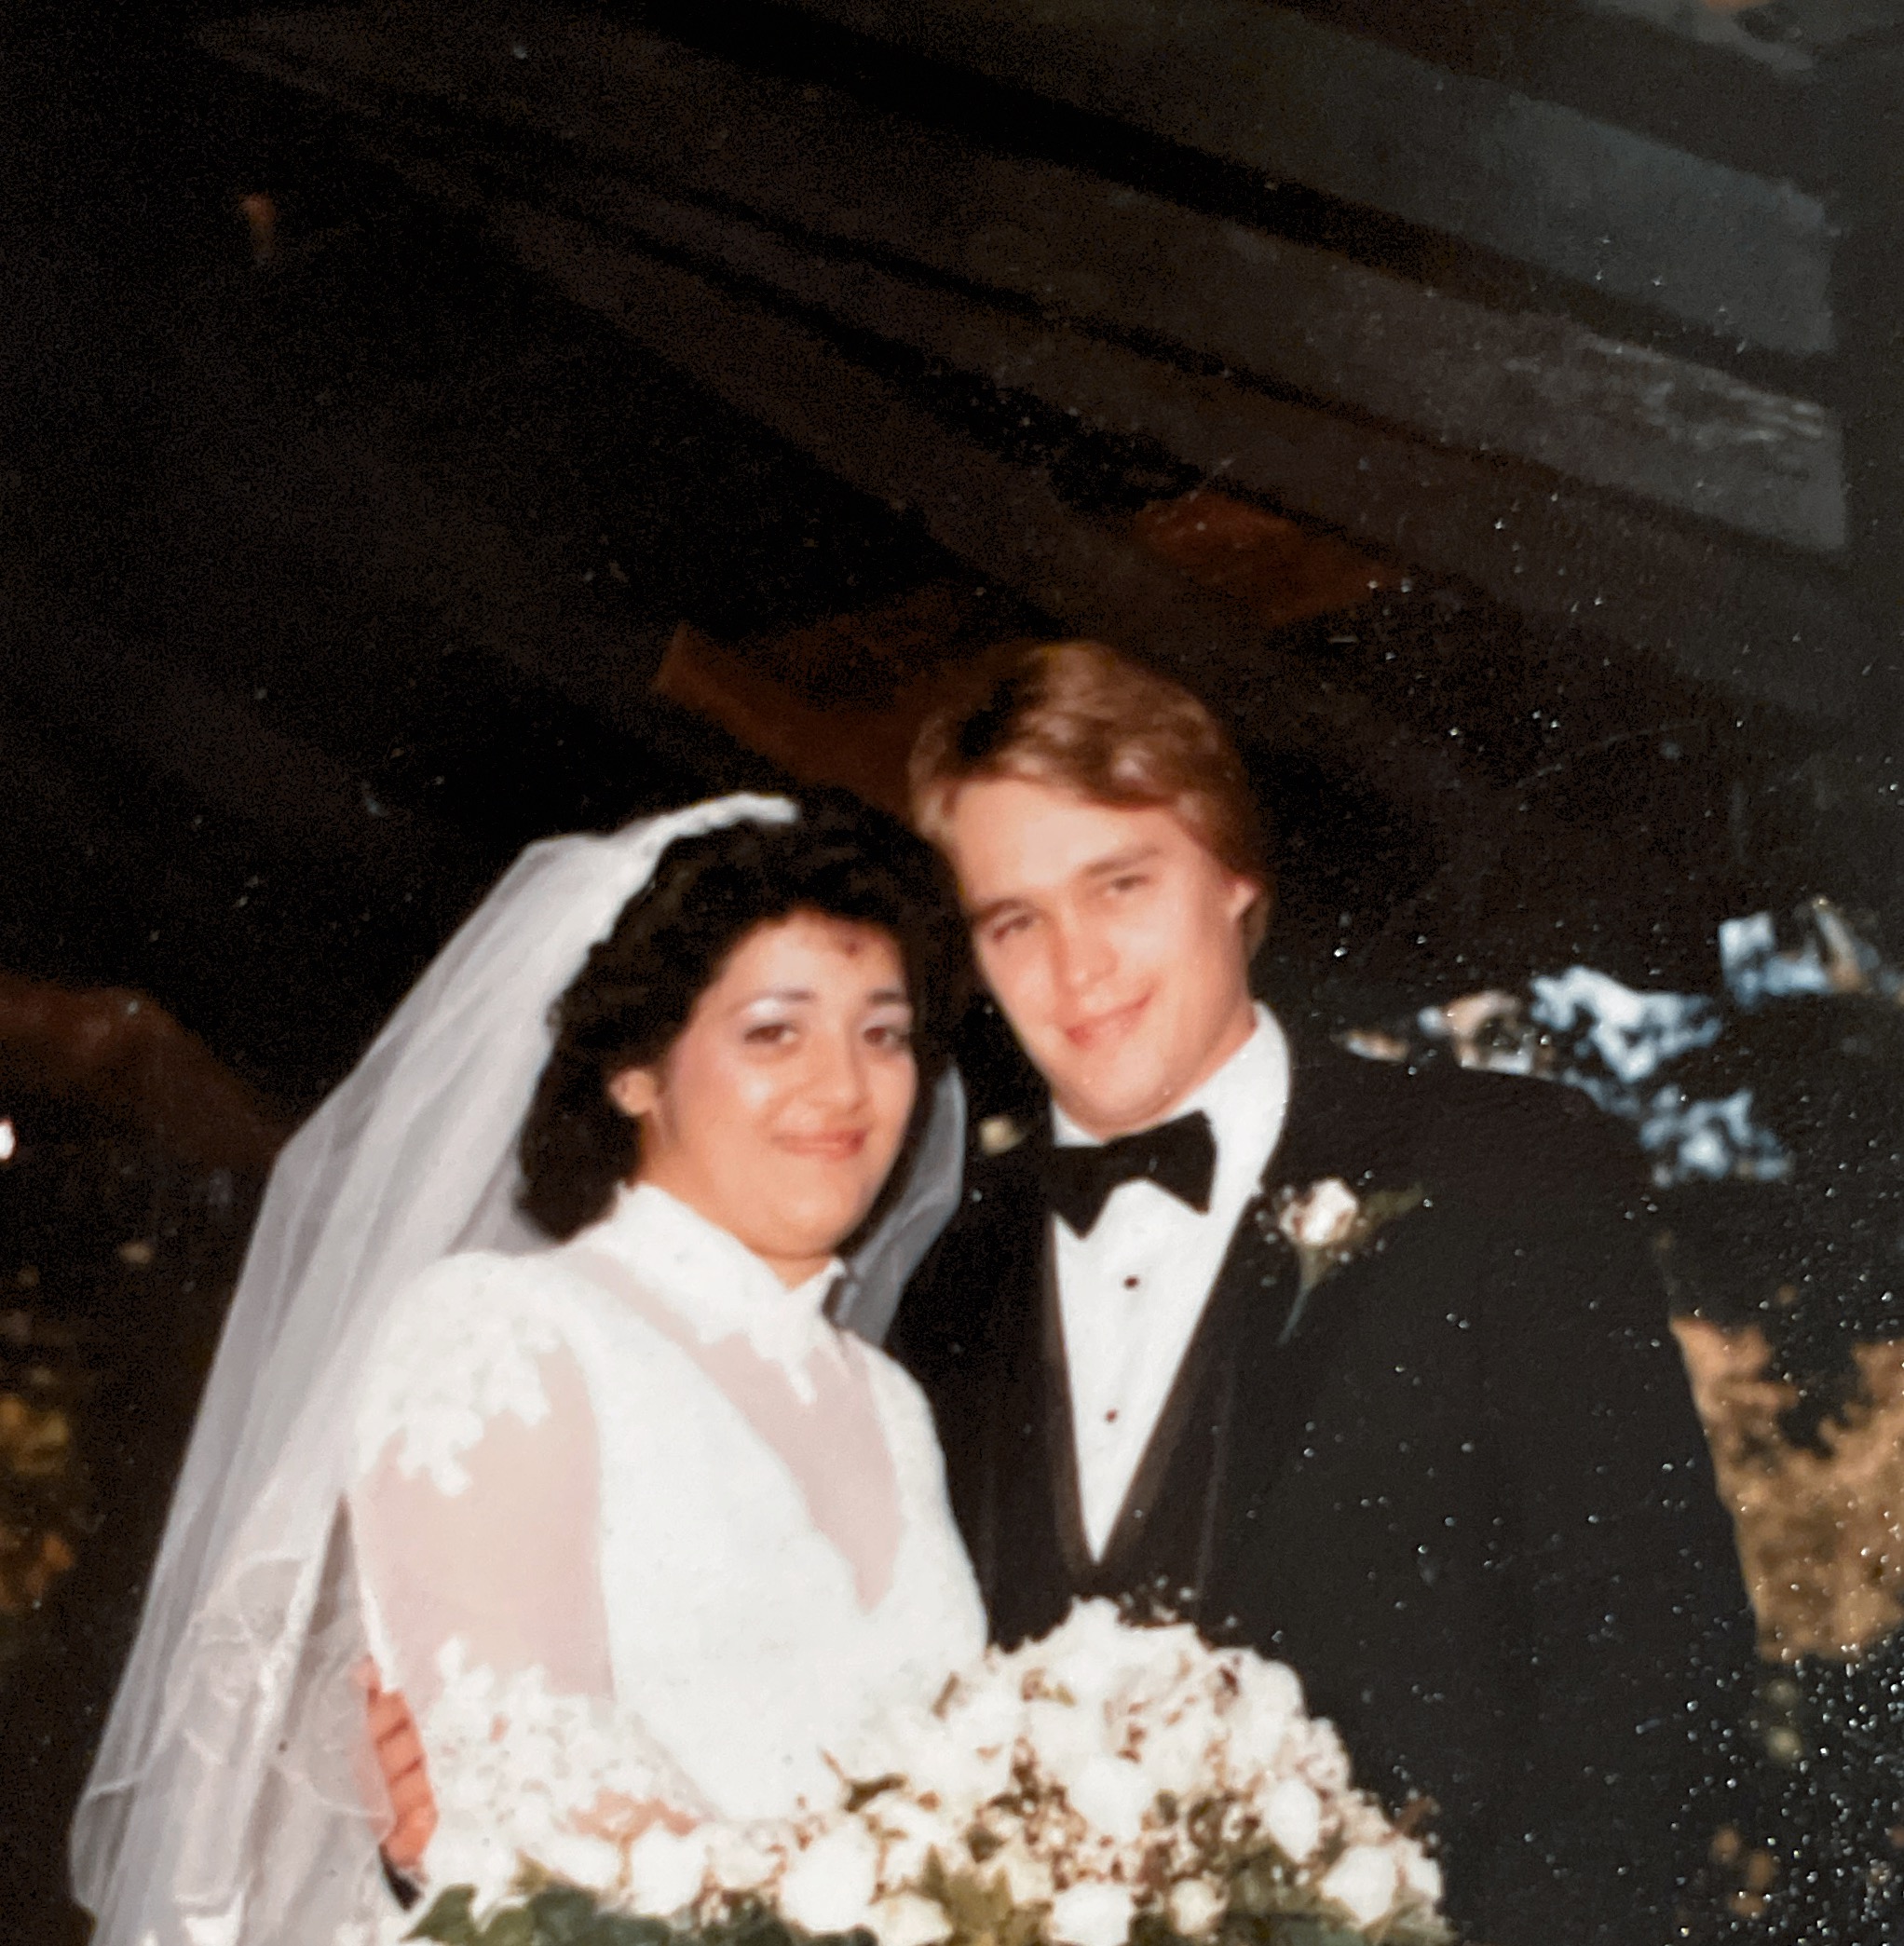 Oct 2 1982. Wedding day